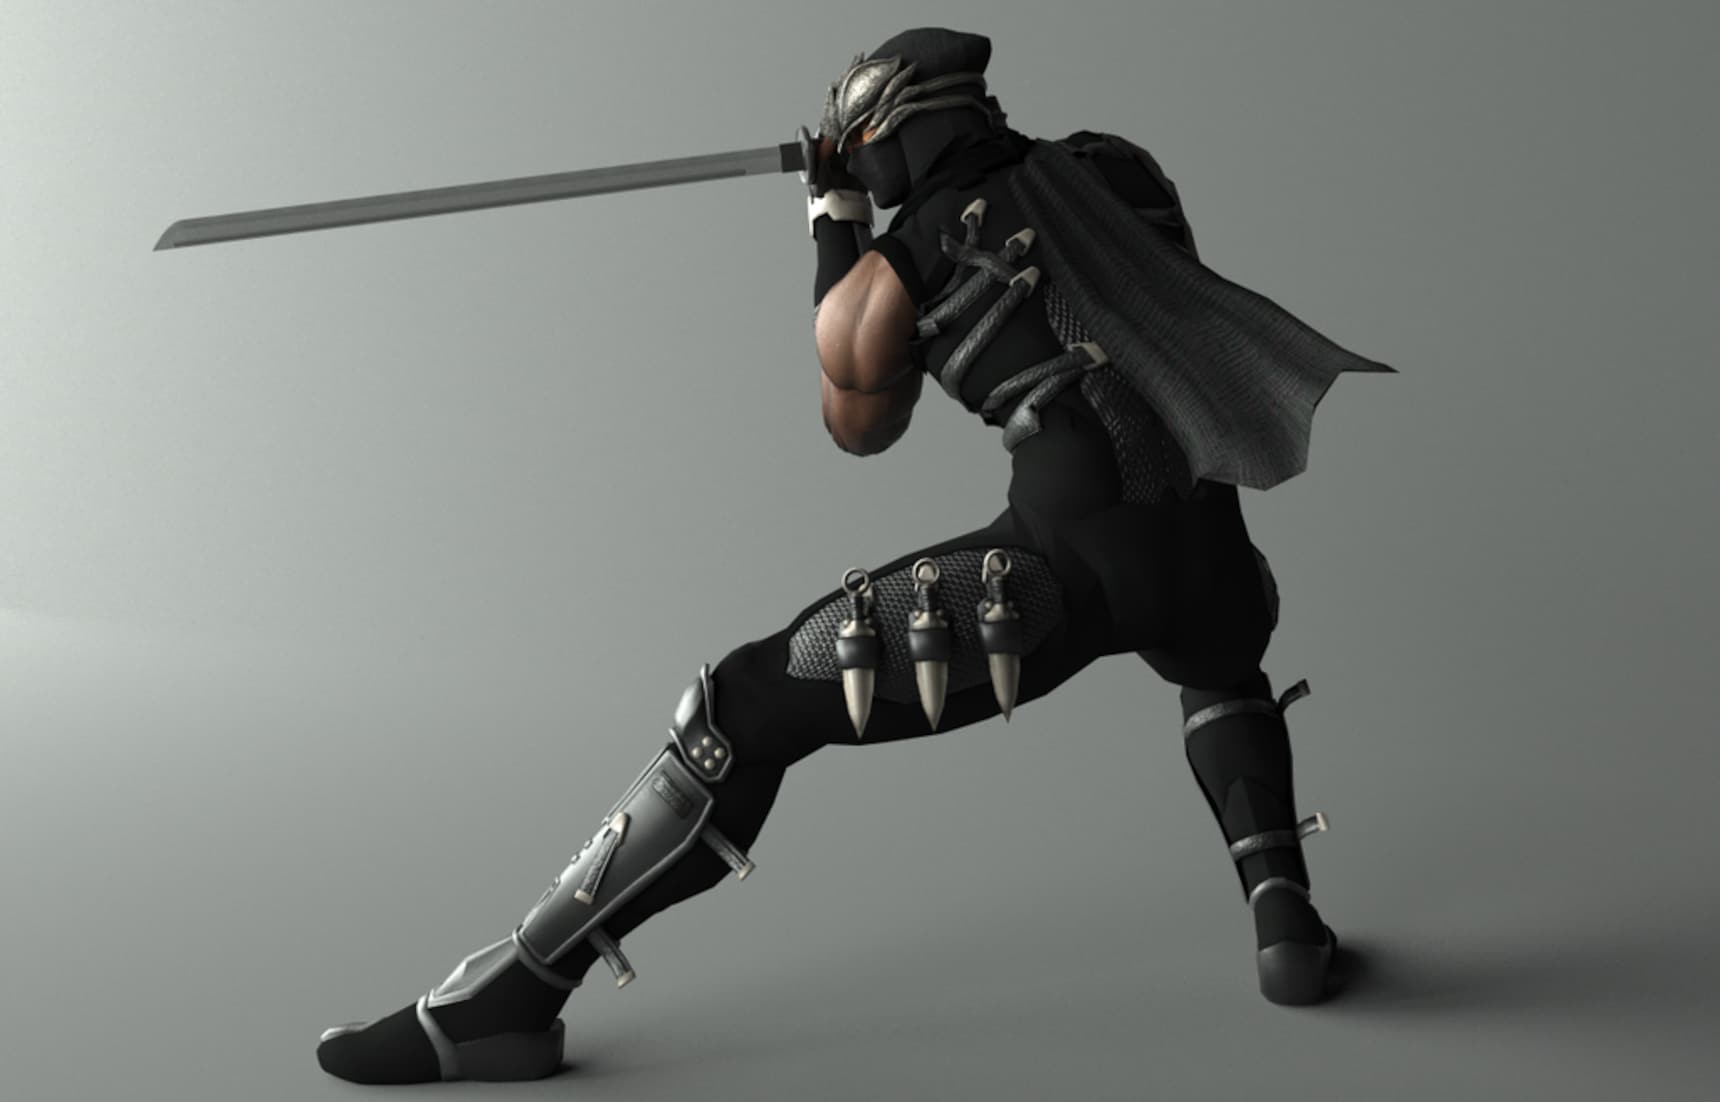 Top 10 Ninja Characters in Video Games